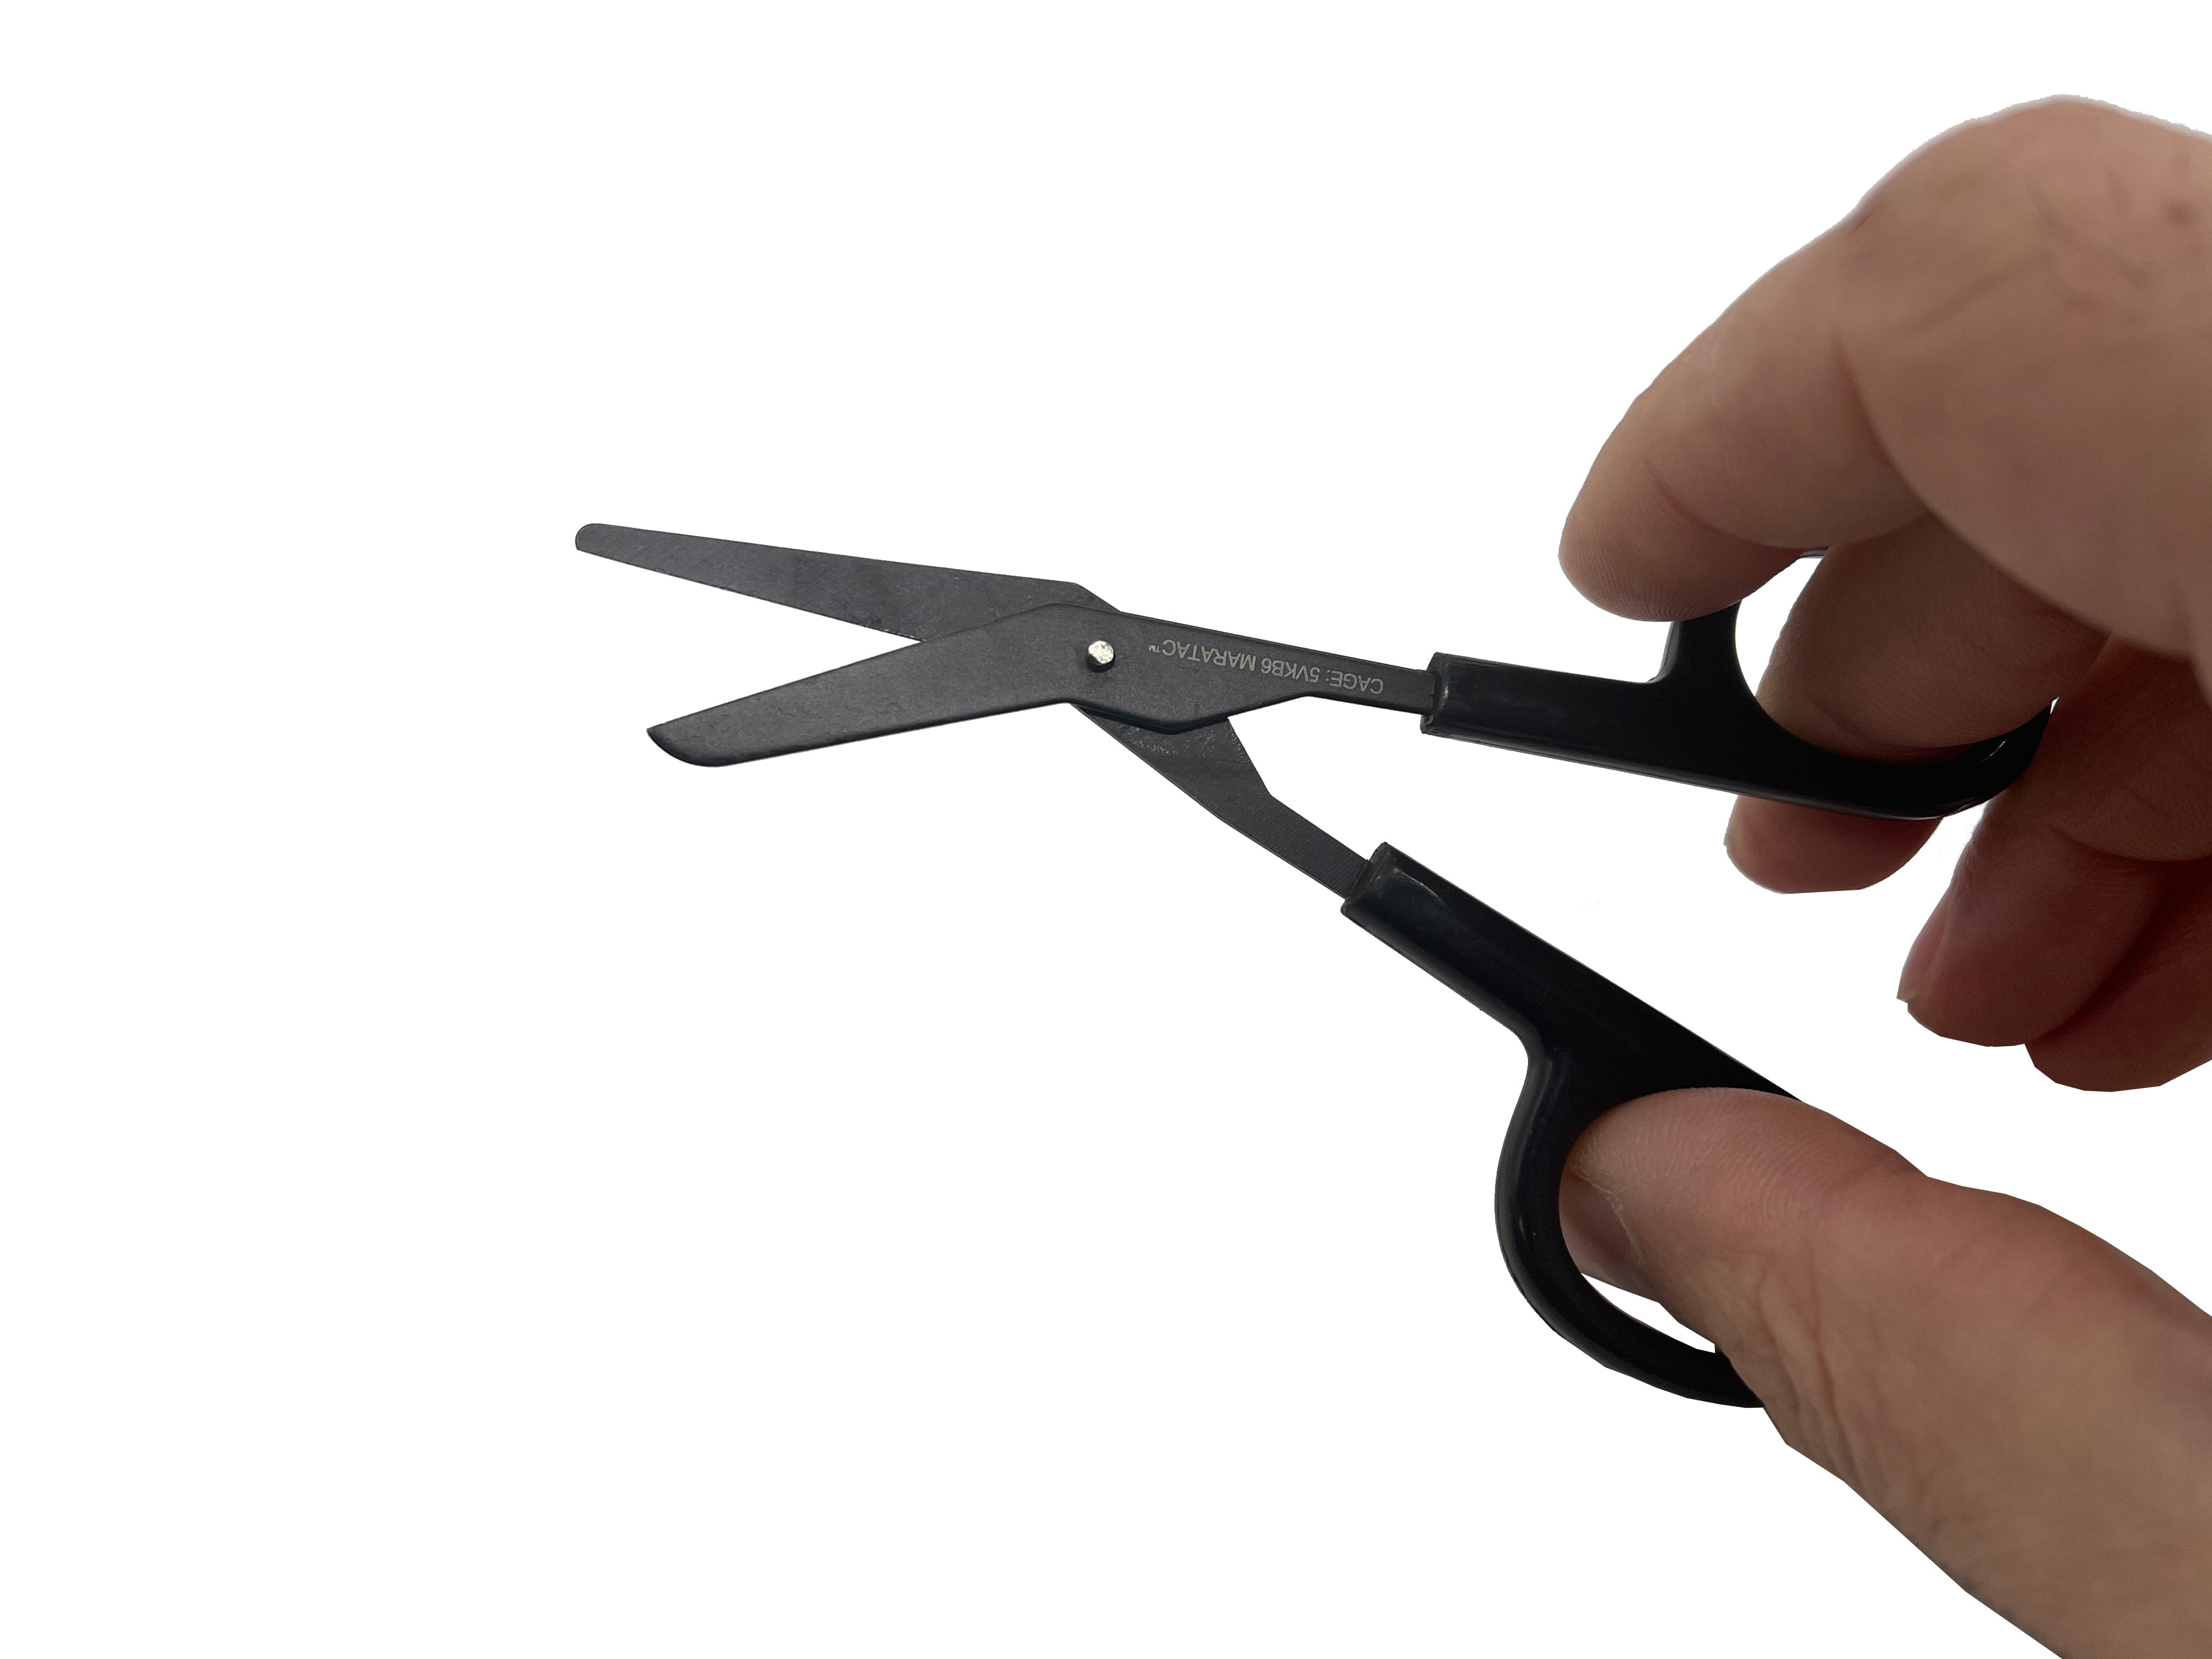 Mini Utility Scissors By Maratac® Gen 2